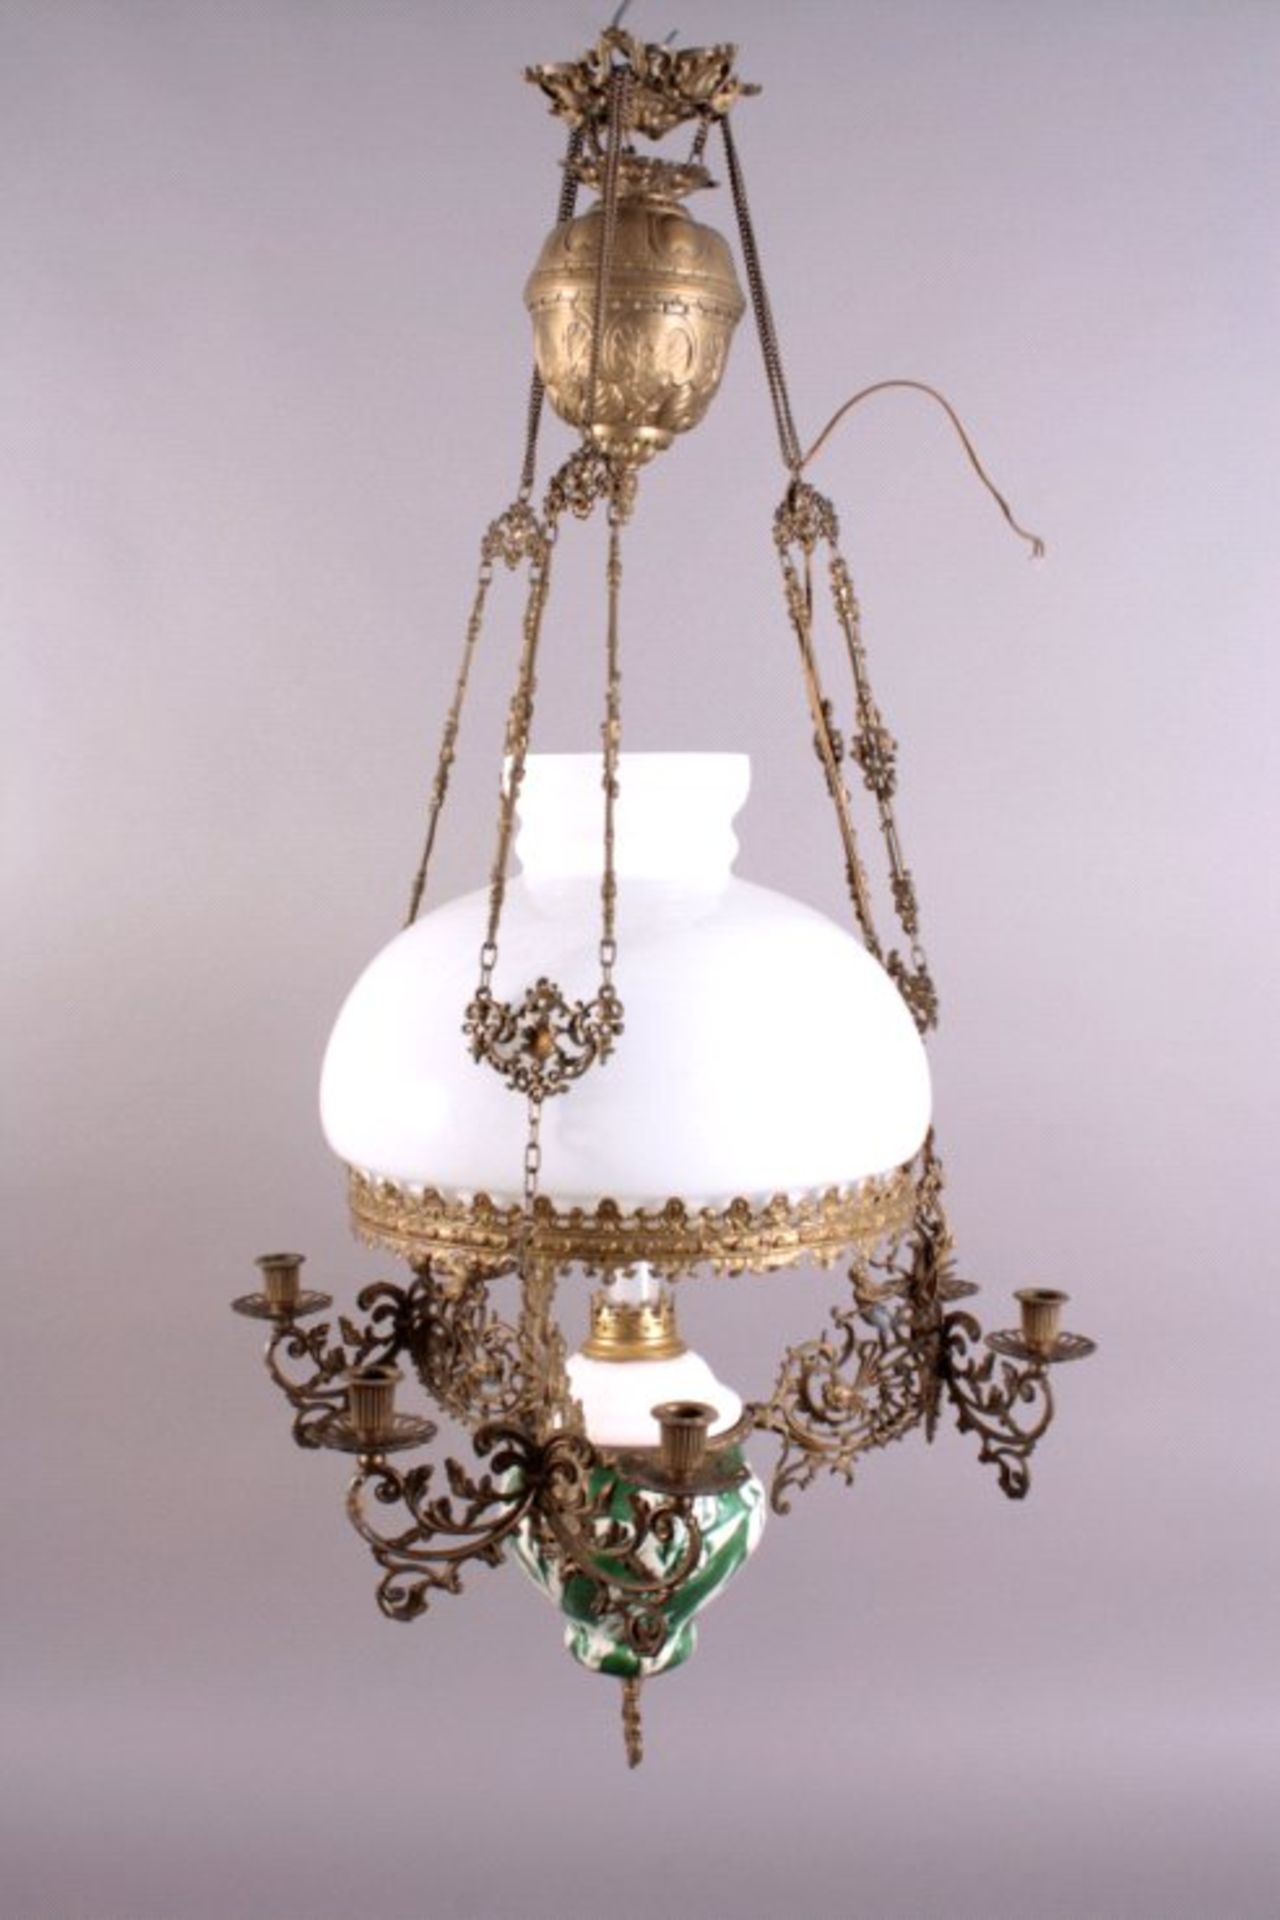 Petroleumlampe um 19007-flammig mit 3 Kerzenhalter, aus Messing gefertigt,elektrifiziert,